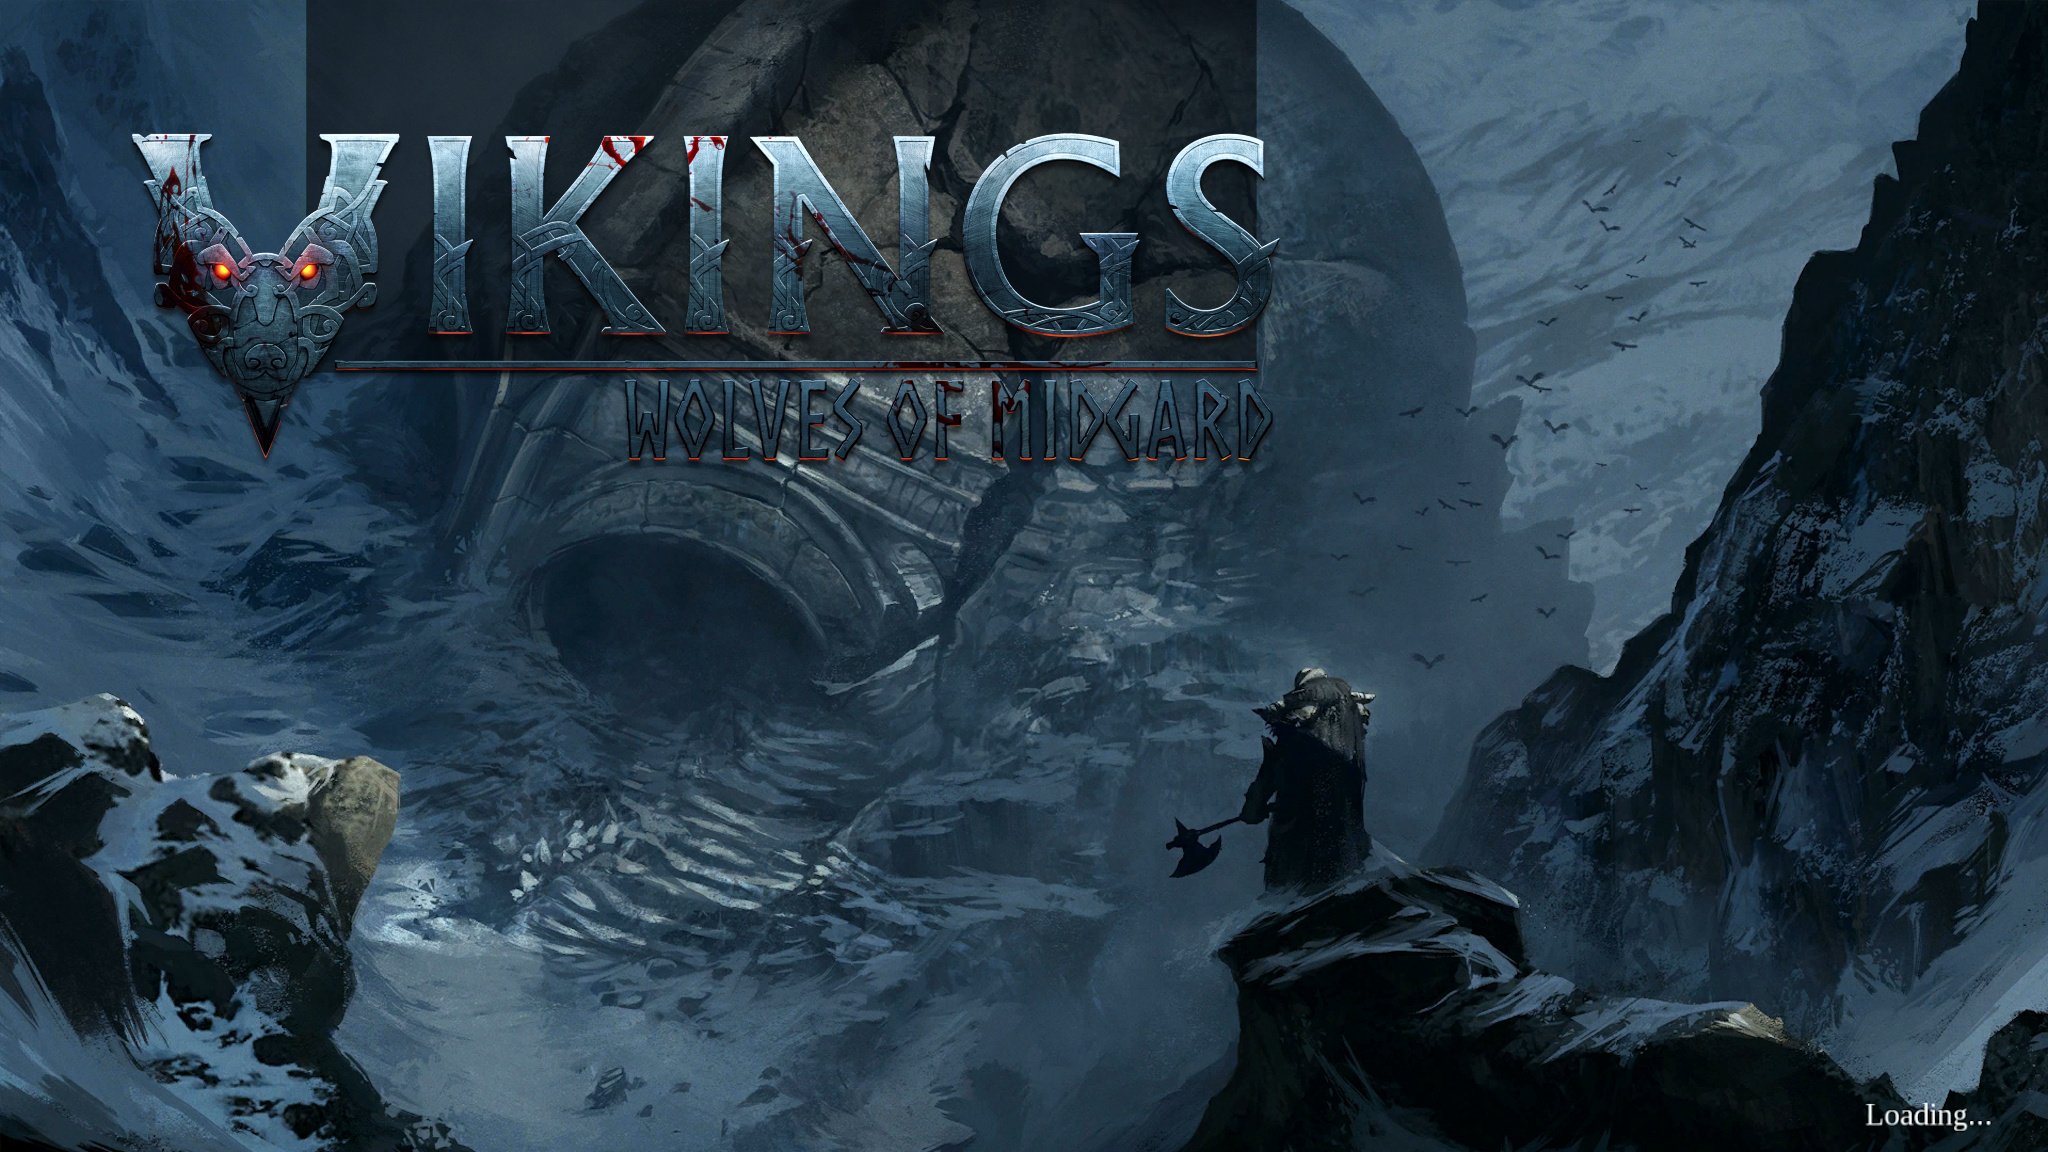 Vikings - Wolves of Midgard on Steam